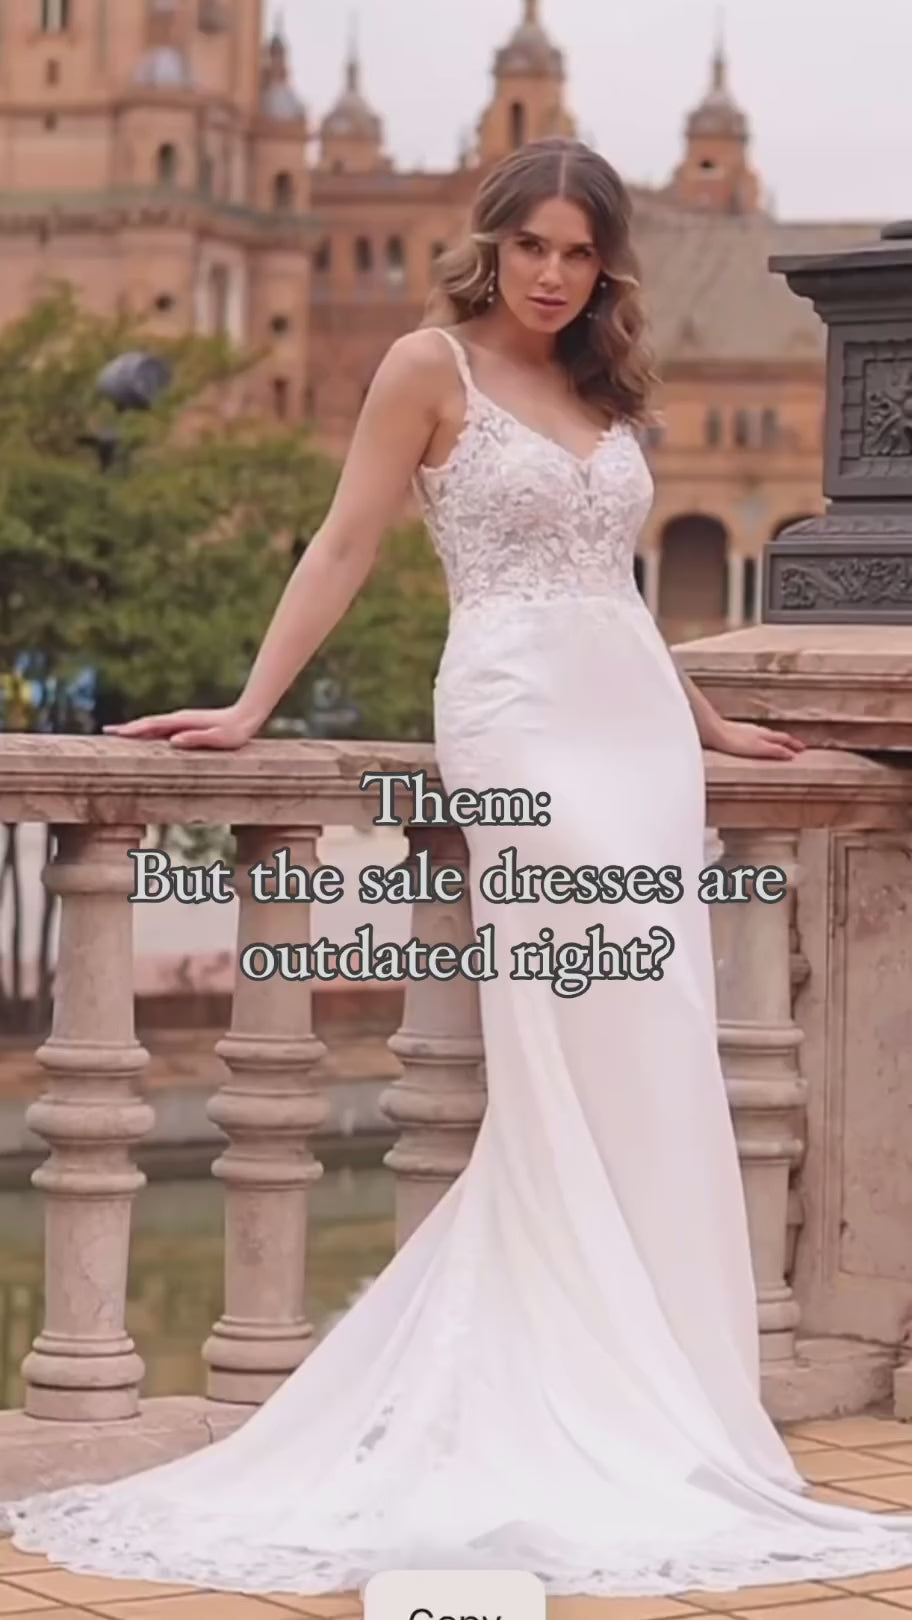 Load video: Video of sample wedding dressses on sale